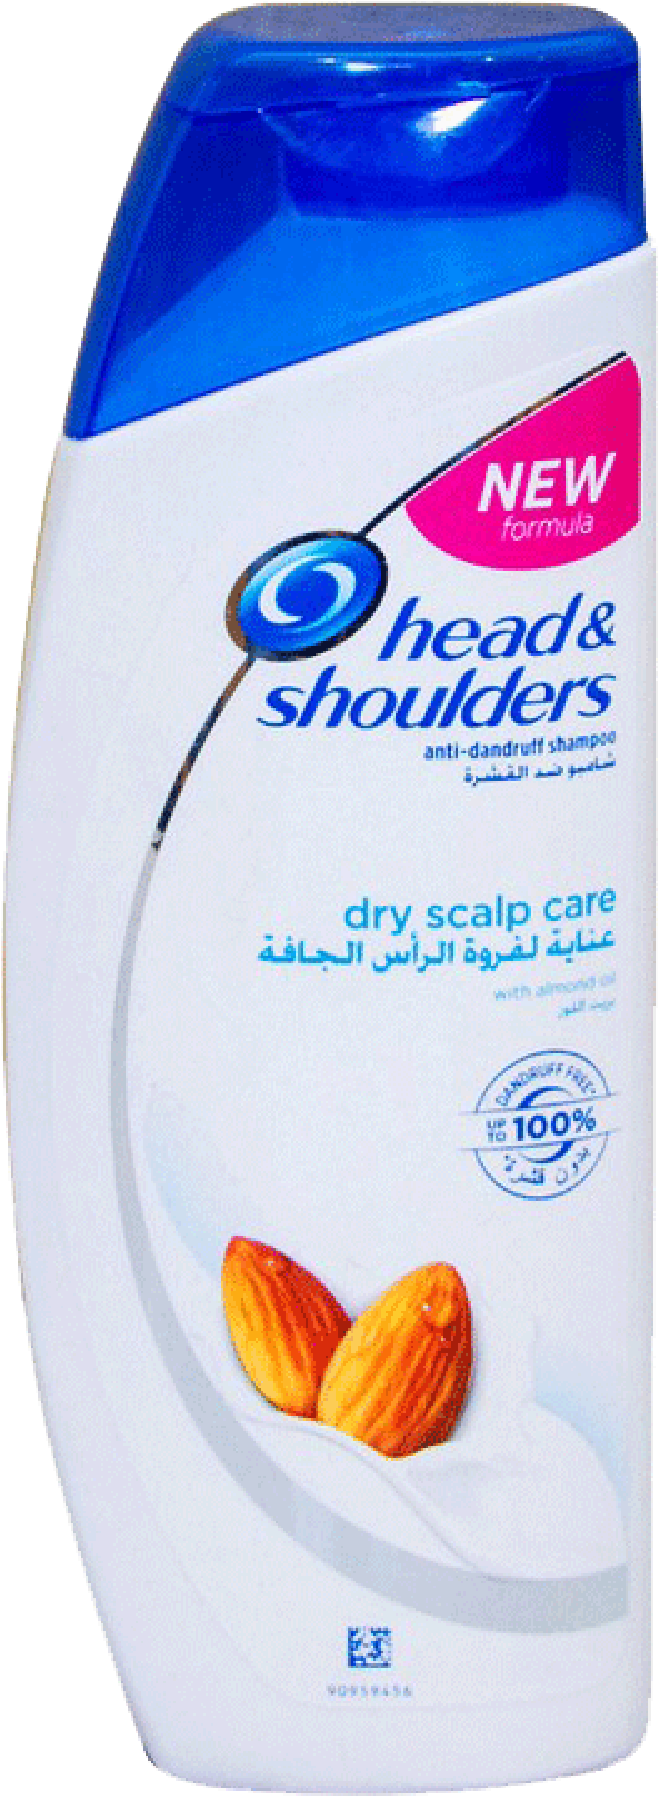 Headand Shoulders Dry Scalp Care Shampoo Bottle PNG